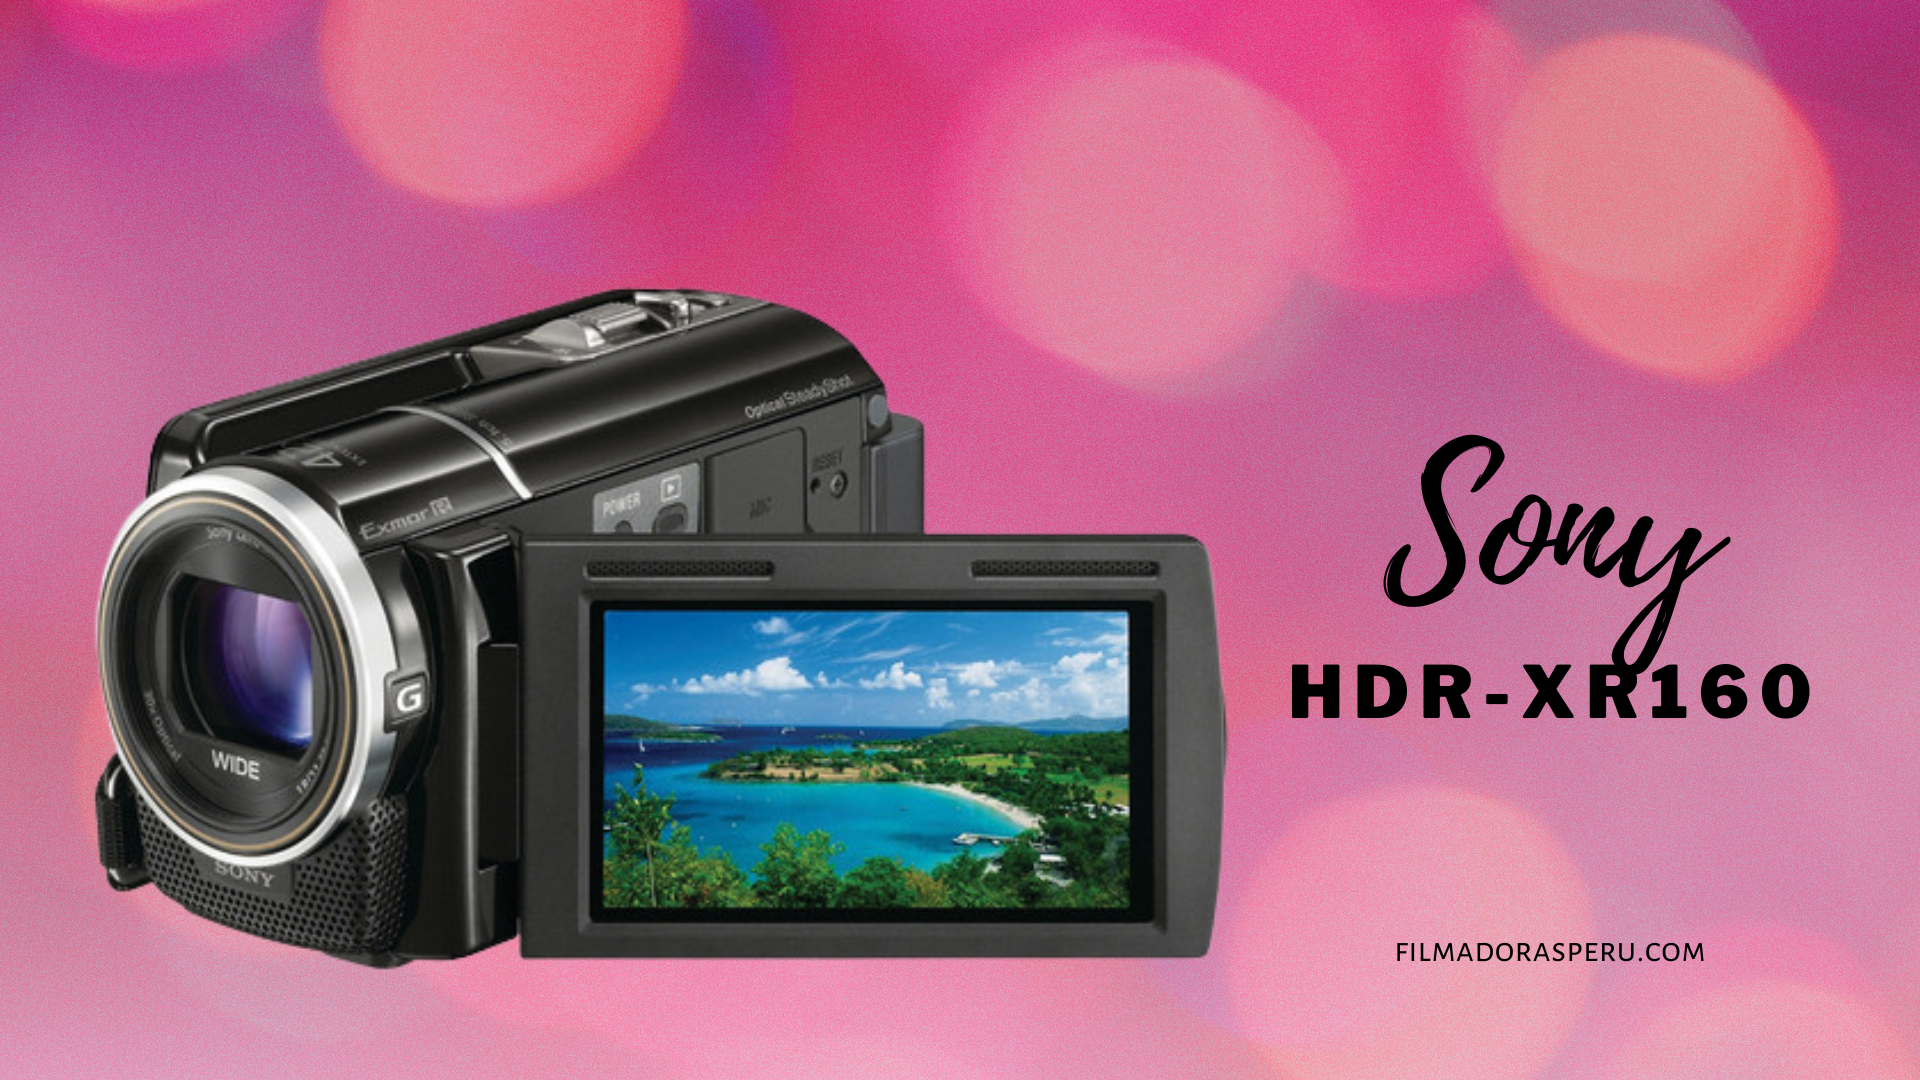 Grabe asombrosos videos con Sony HDR-XR160